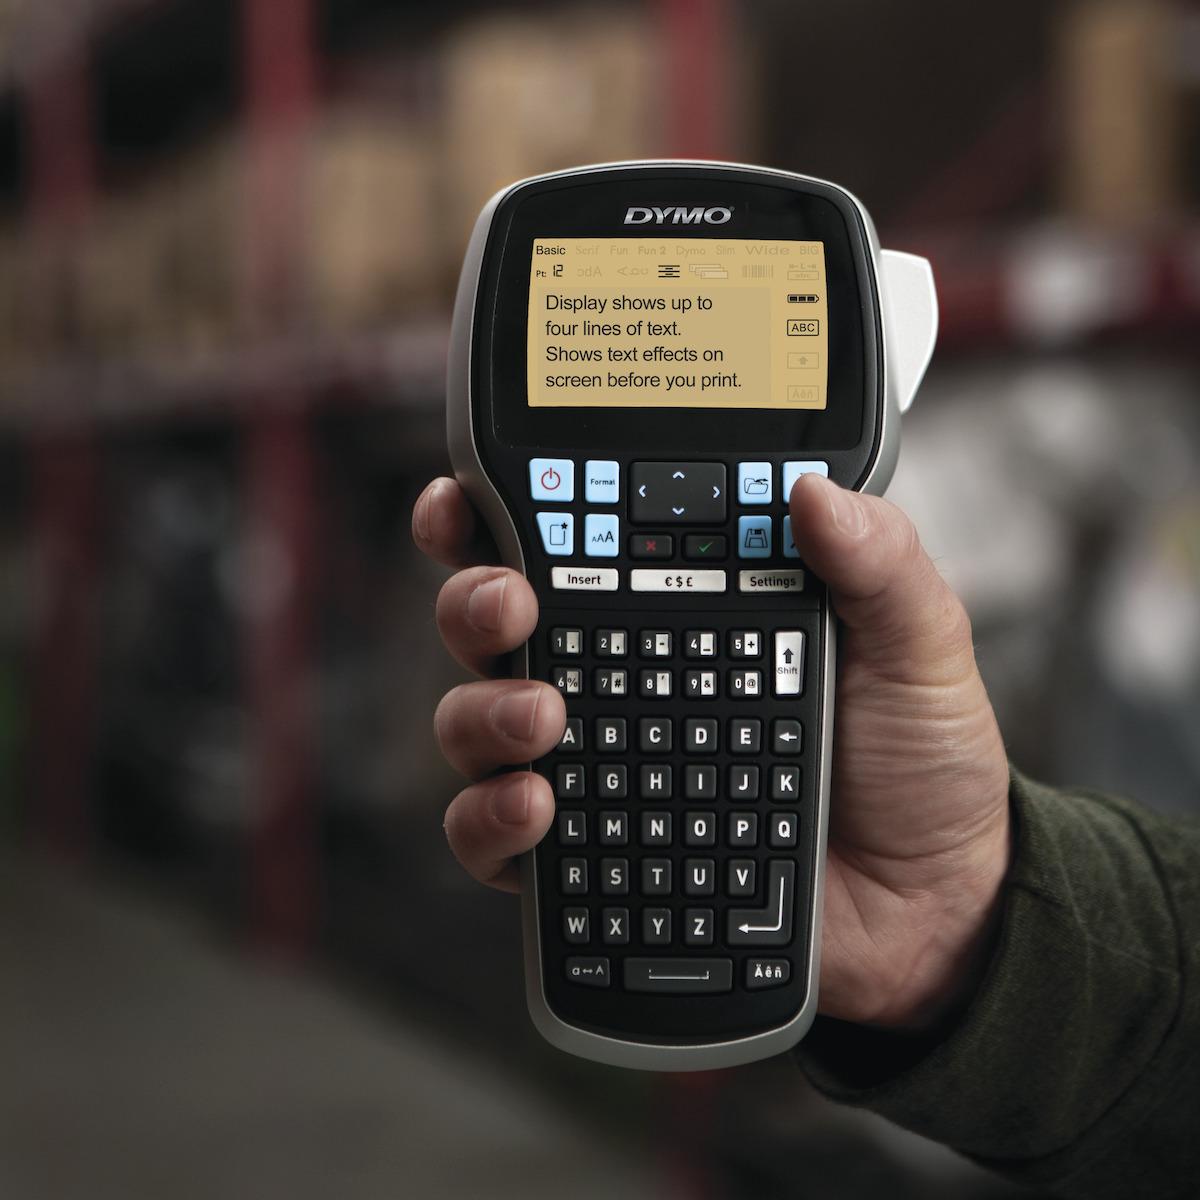 Dymo LM 420P ABC Handheld use Label Maker